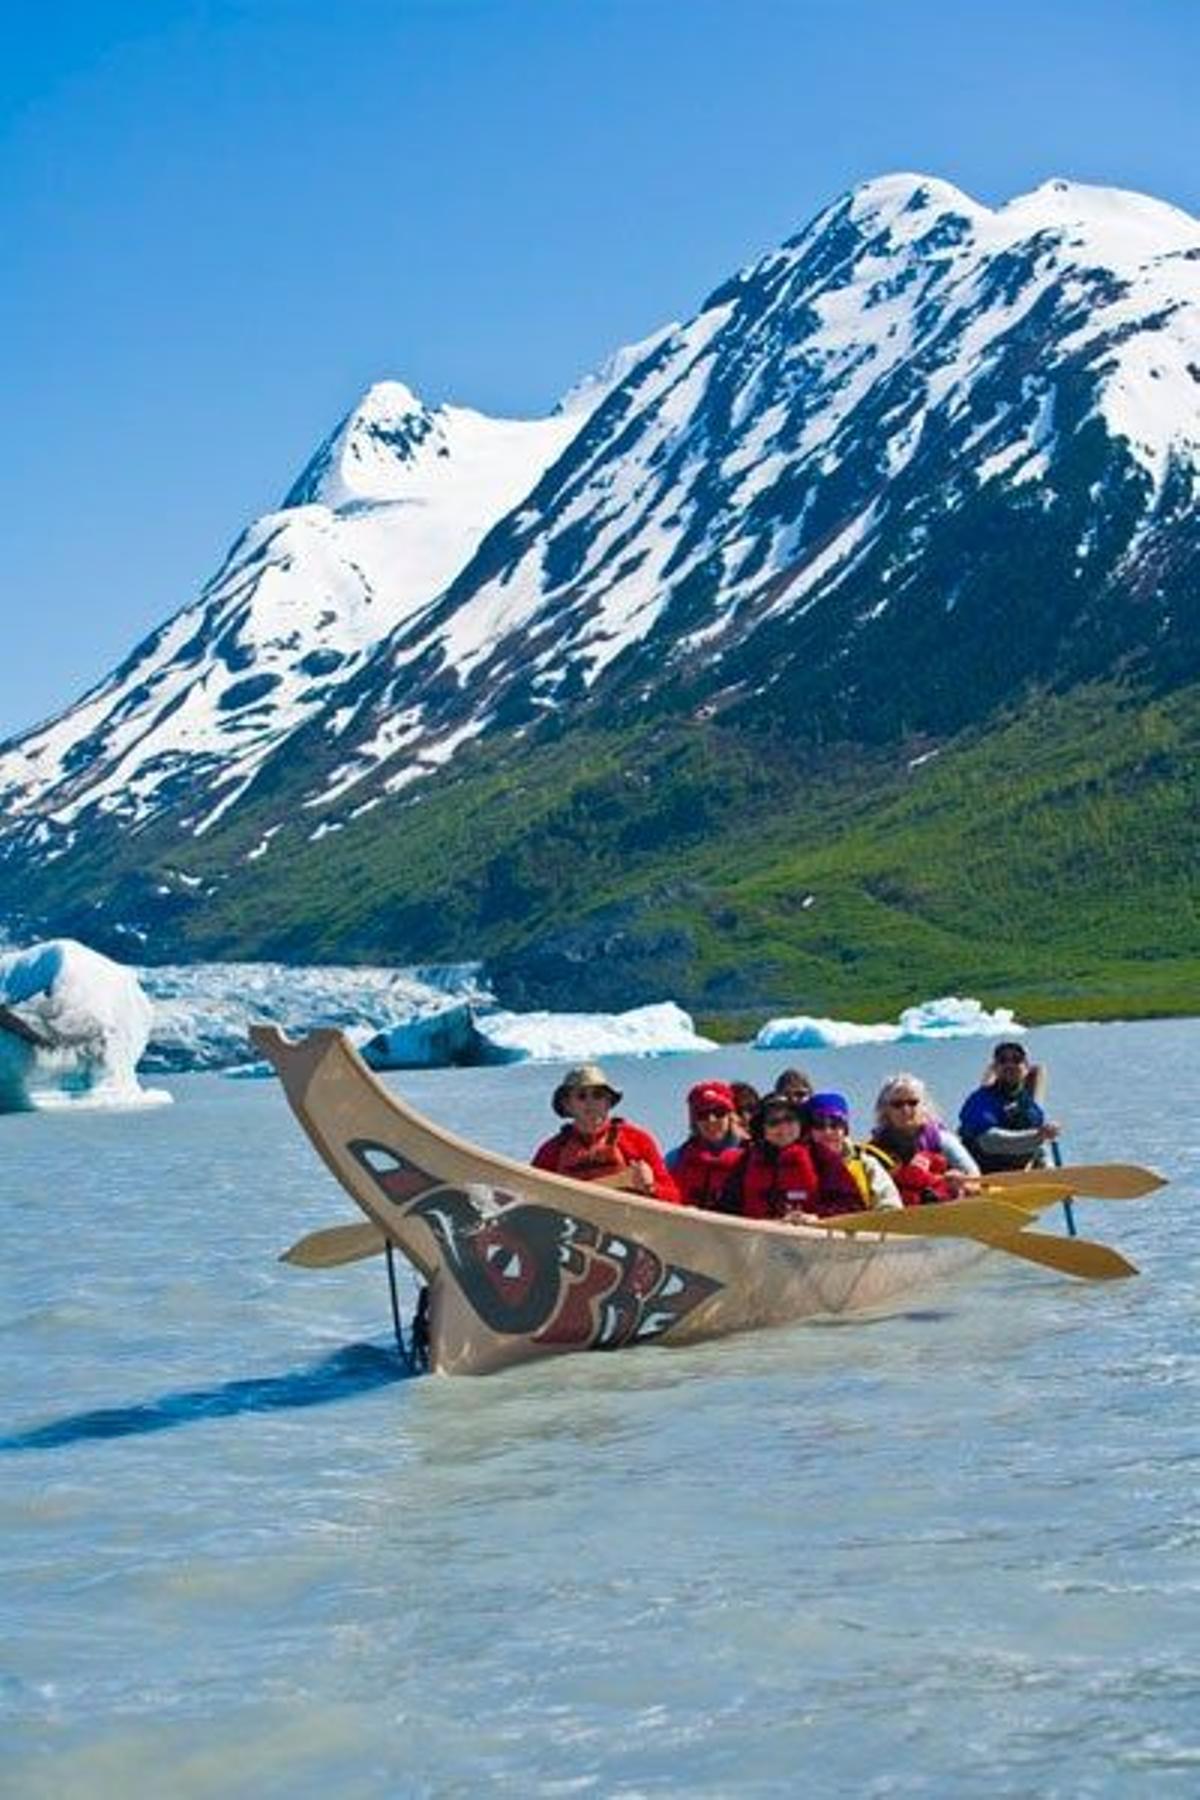 Canoa típica de los nativos de Alaska.